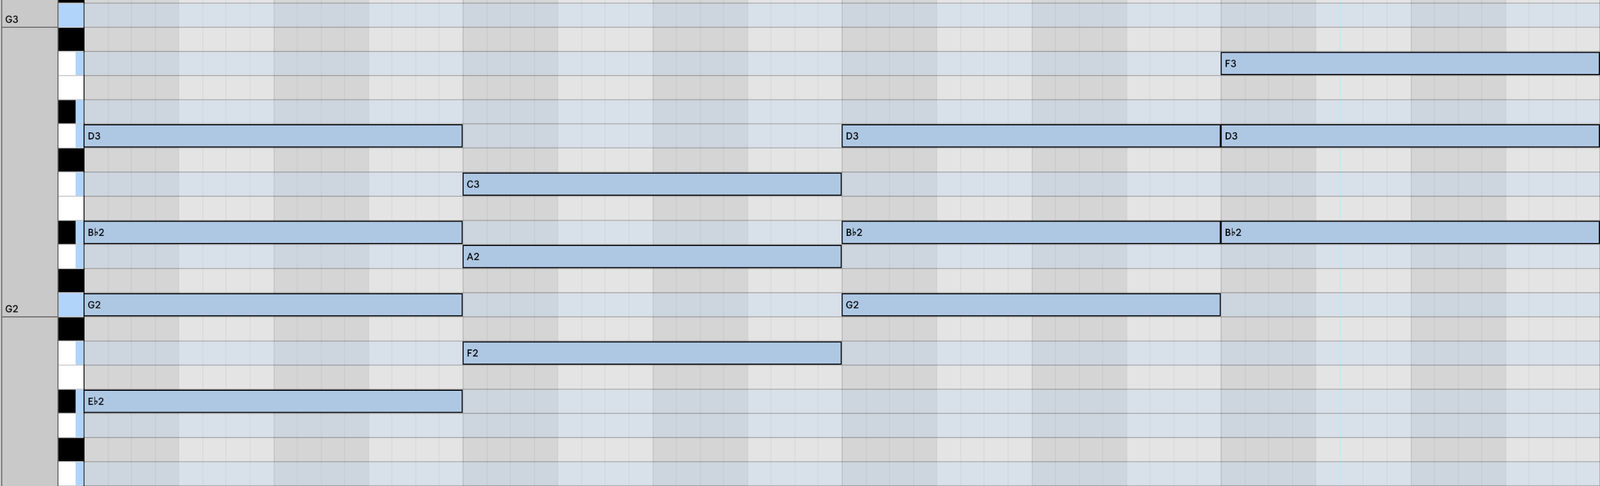 chord progression (VI7 VII i III)